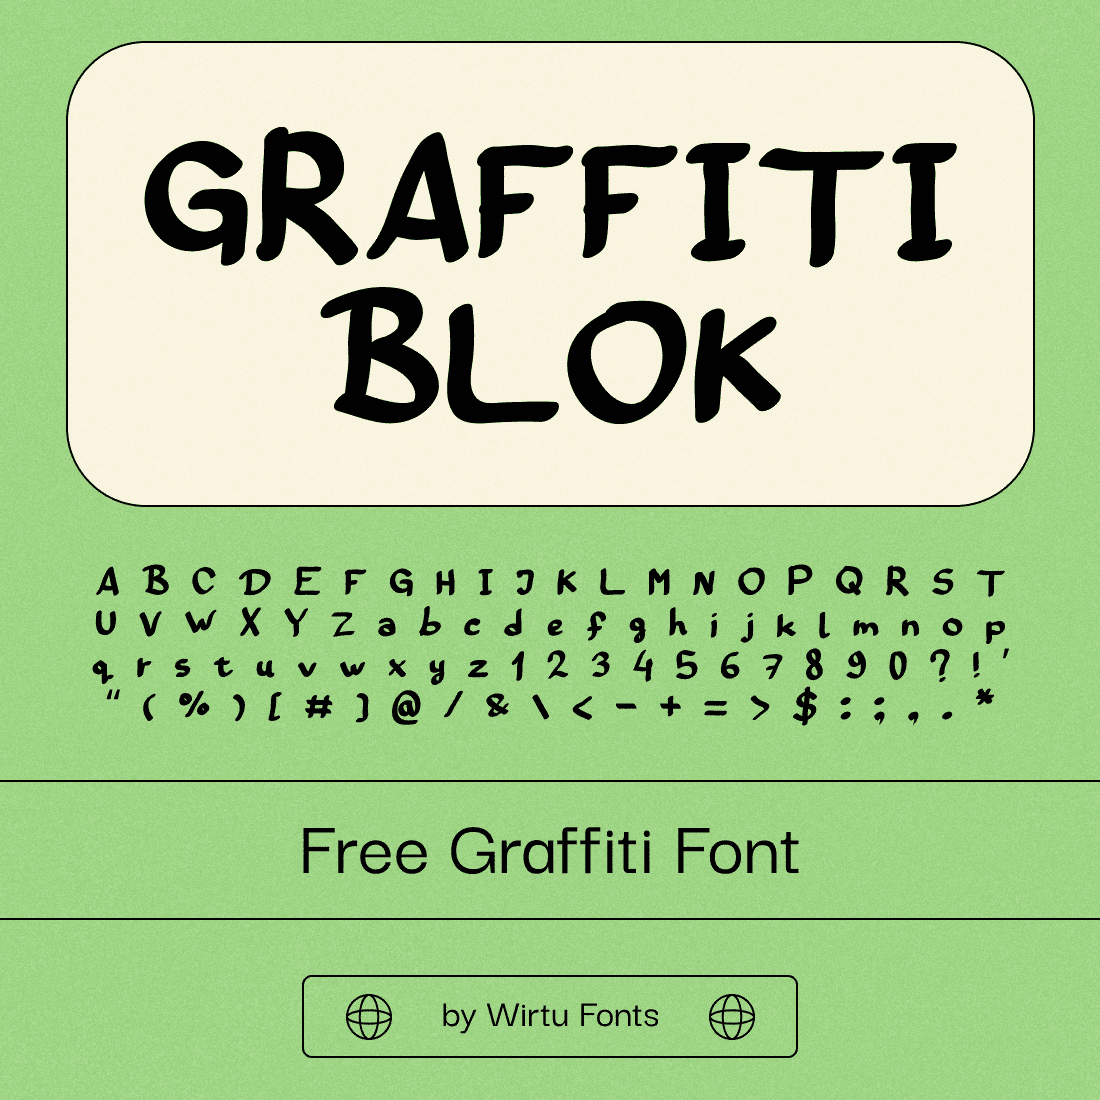 Graffiti Blok Free Font Example.